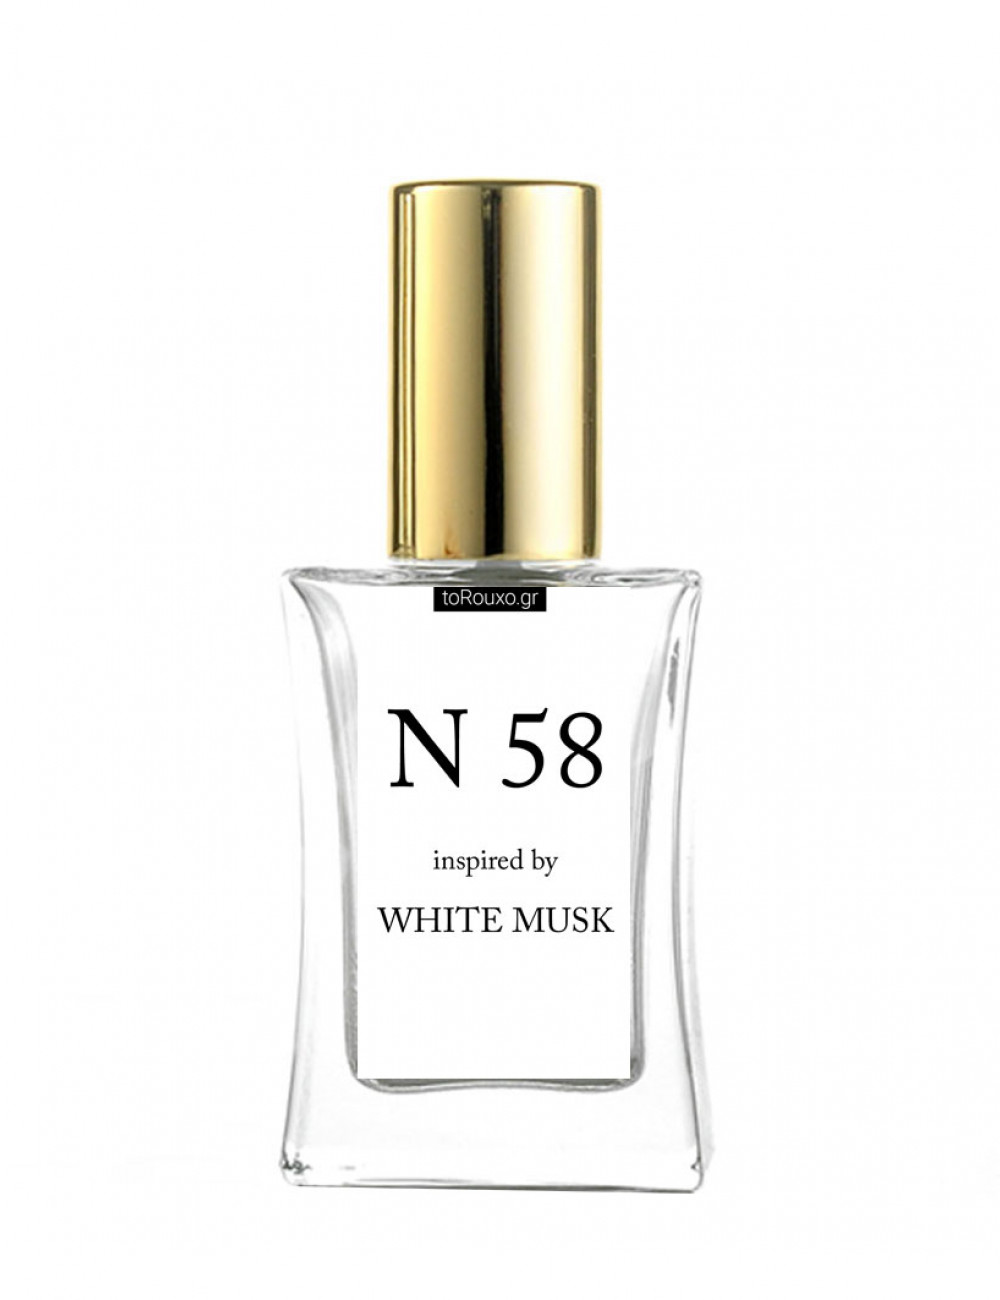 N58 εμπνευσμένο από WHITE MUSK